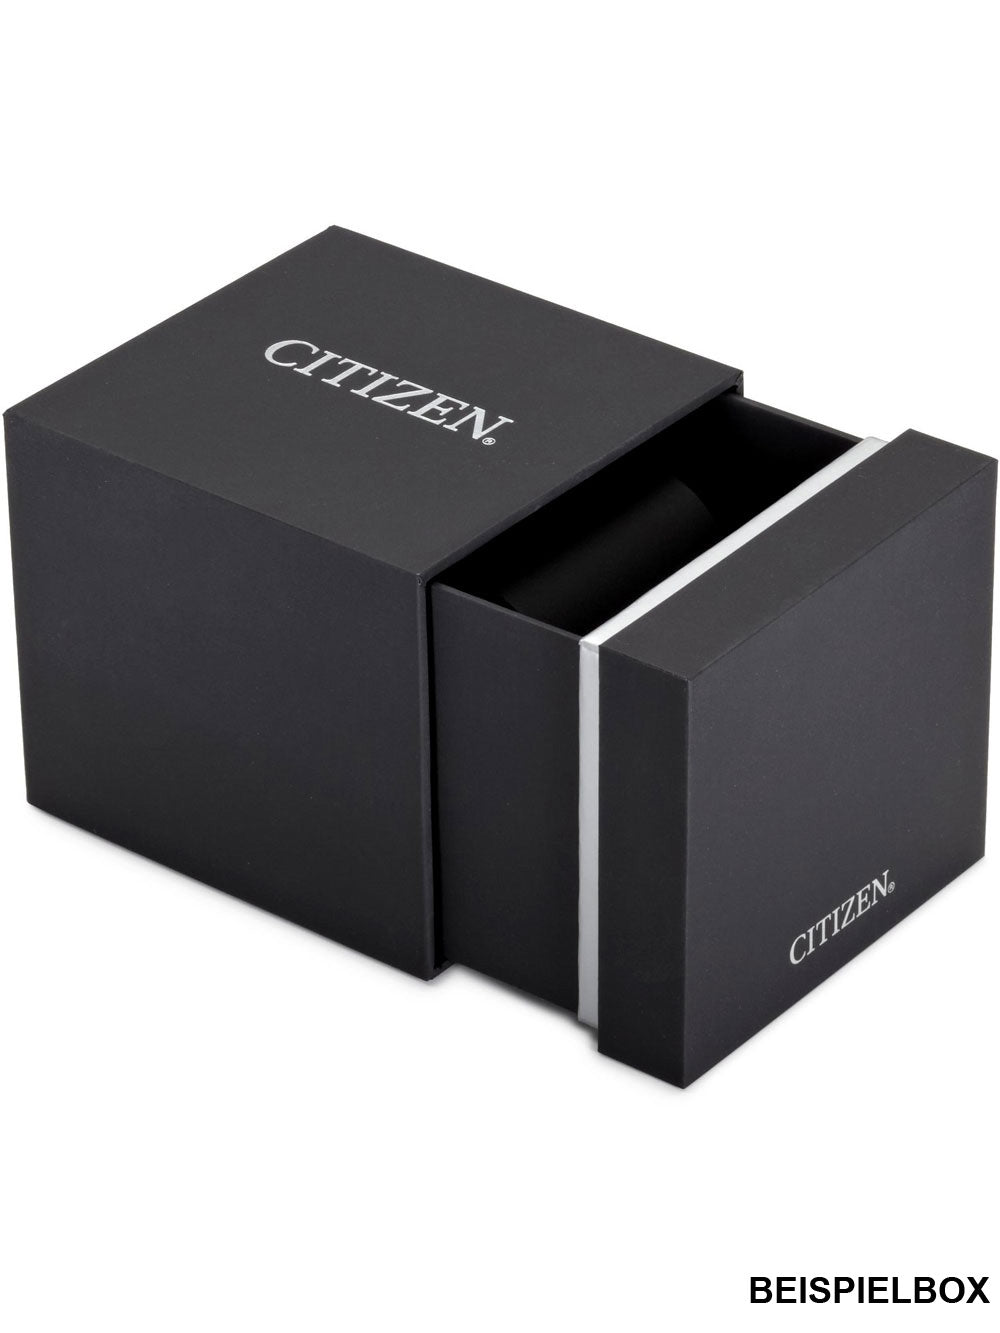 Citizen EM0643-84X Elegance Ladies 31mm 5ATM